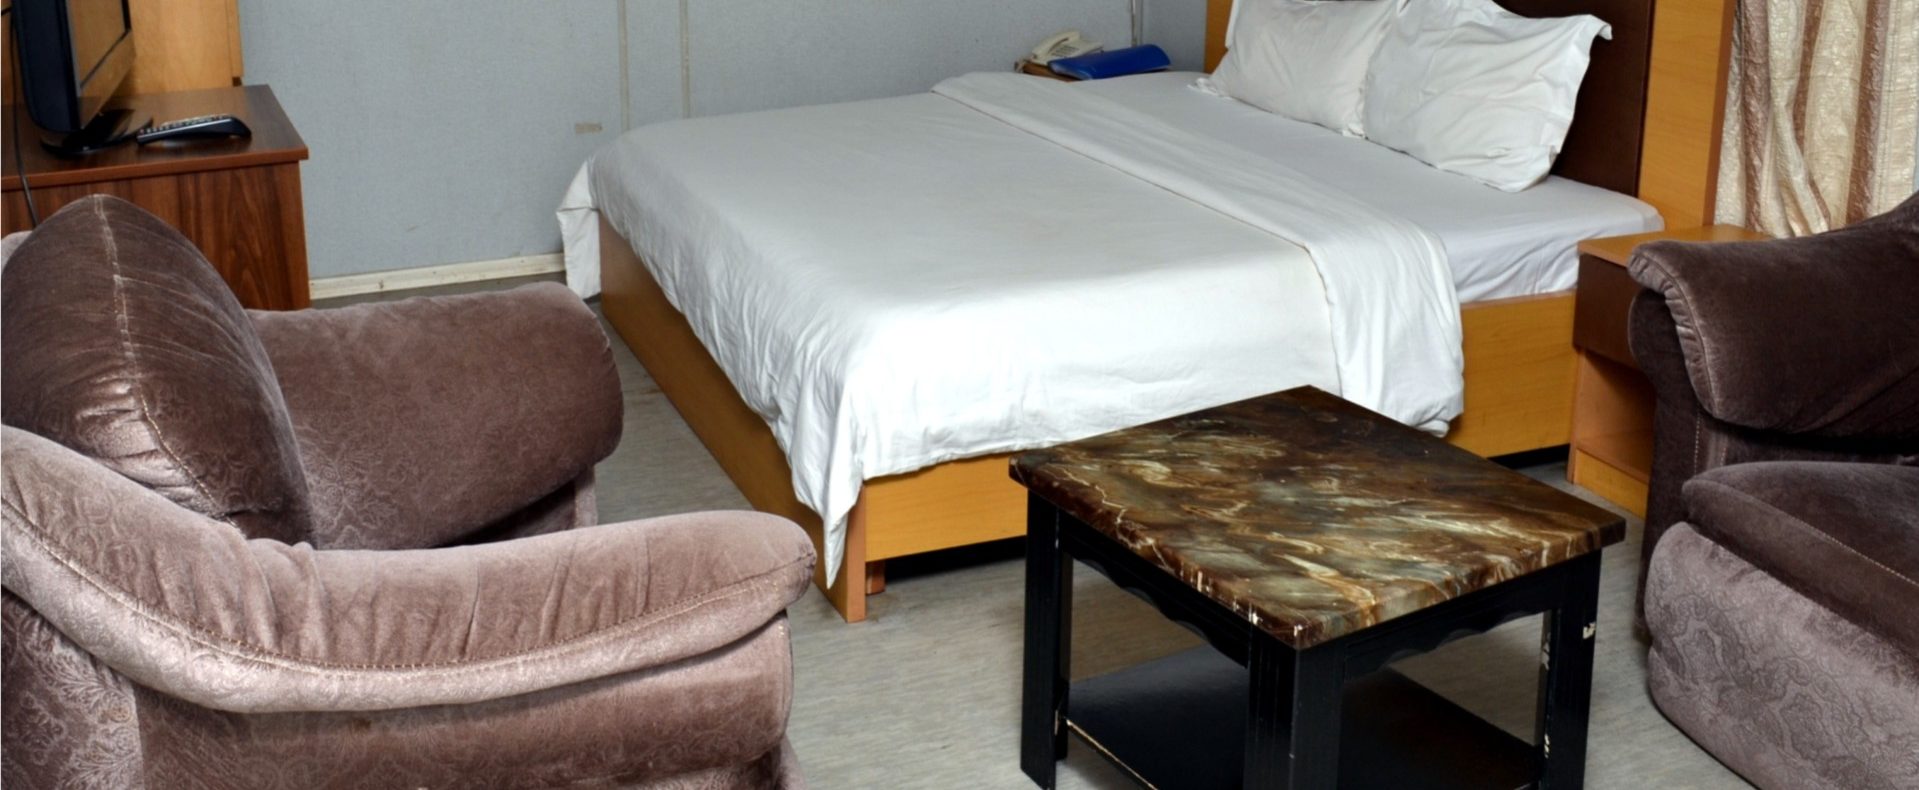 Hotel World Traveler I Room Type In Abuja Fct Nigeria